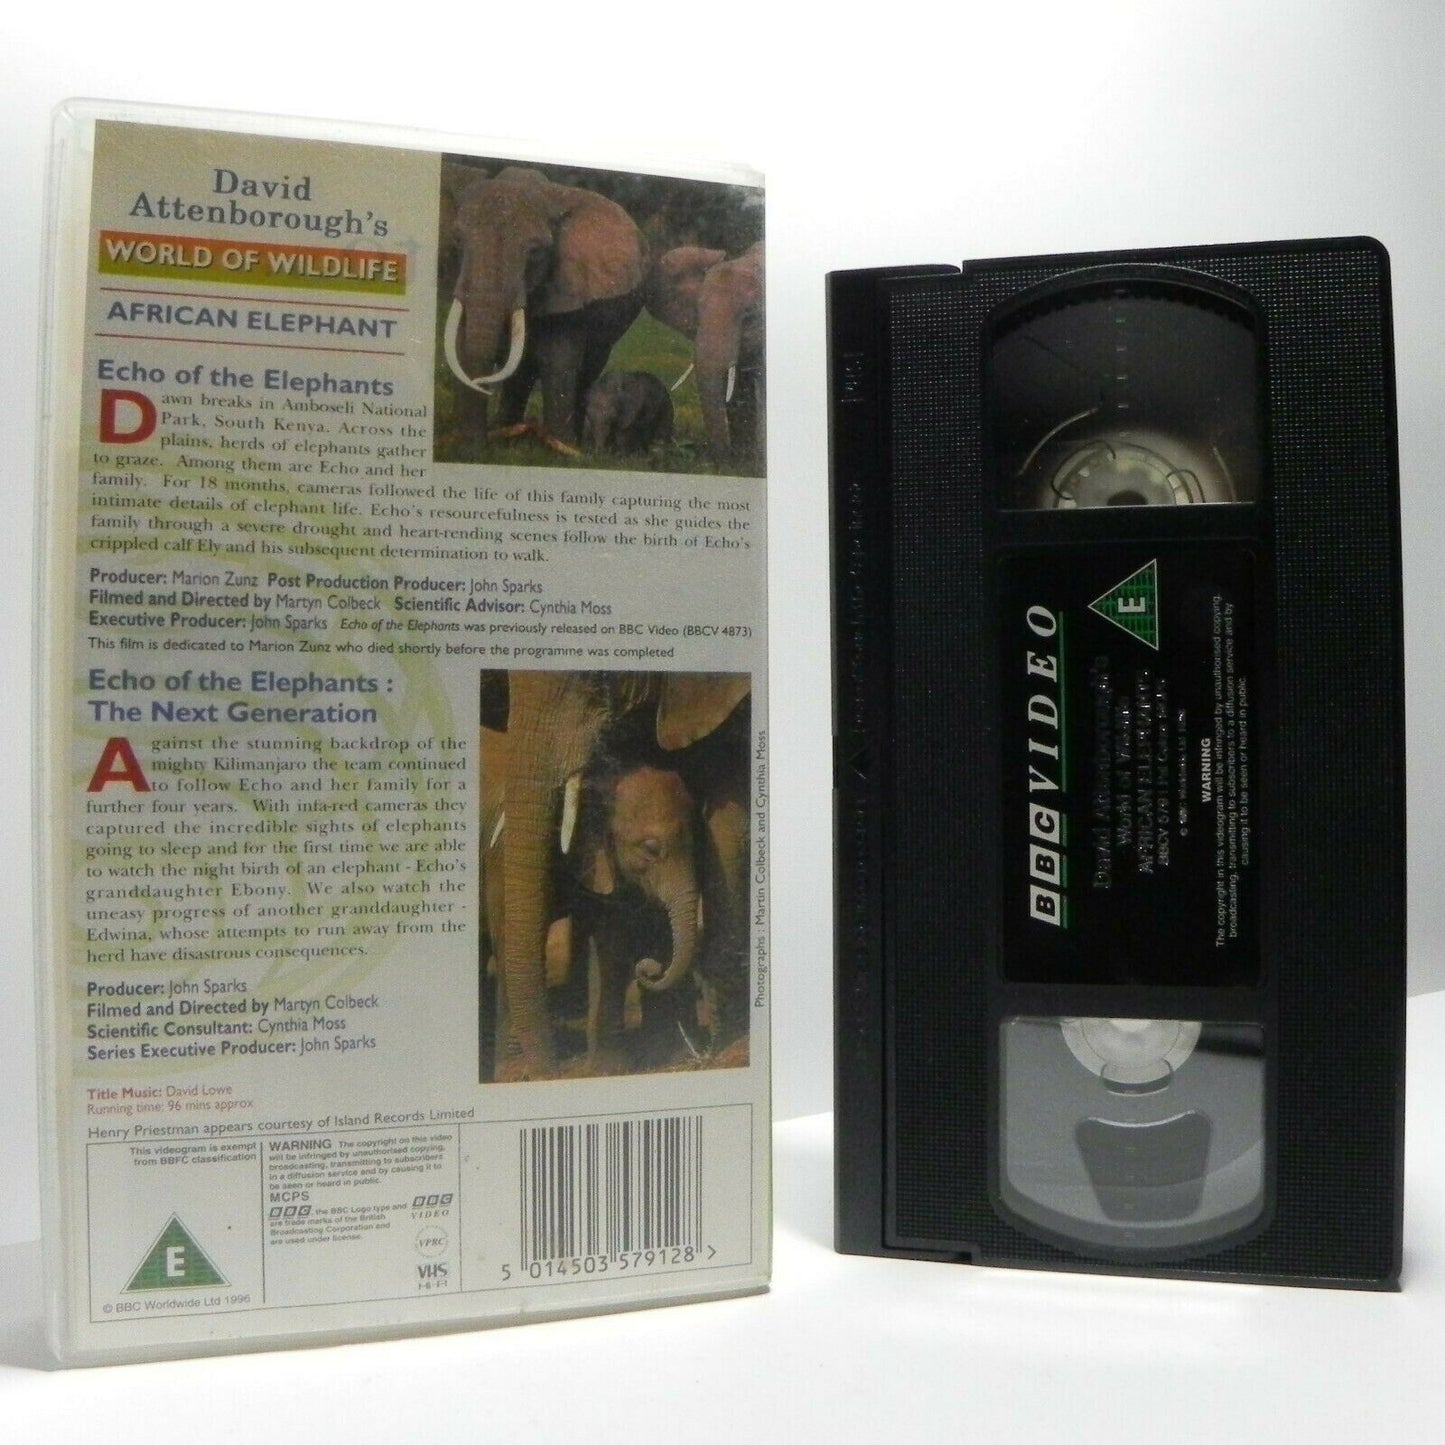 World Of Wildlife: African Elephants - D.Attenborough - Documentary - Pal VHS-